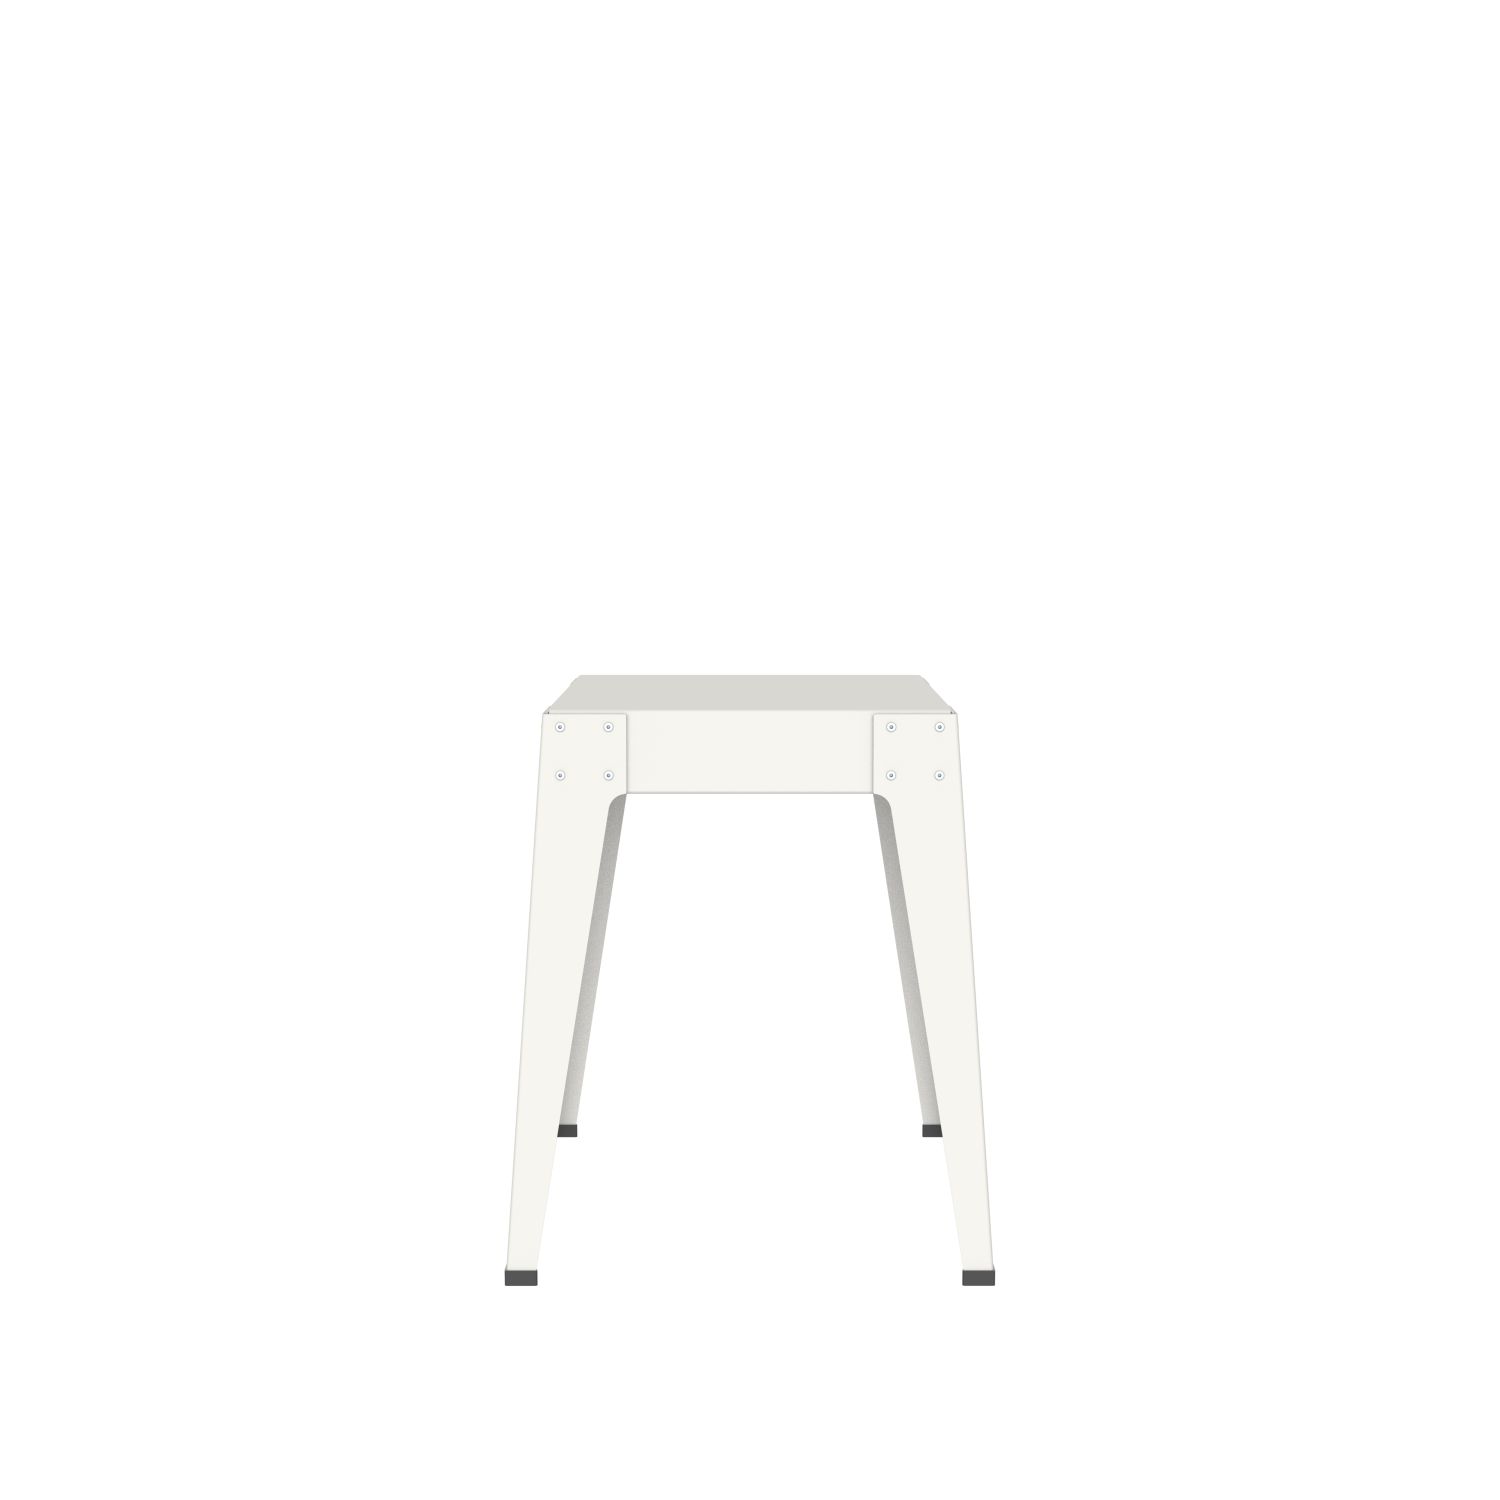 lensvelt piet hein eek aluminium series stool white ral9010 hard leg ends